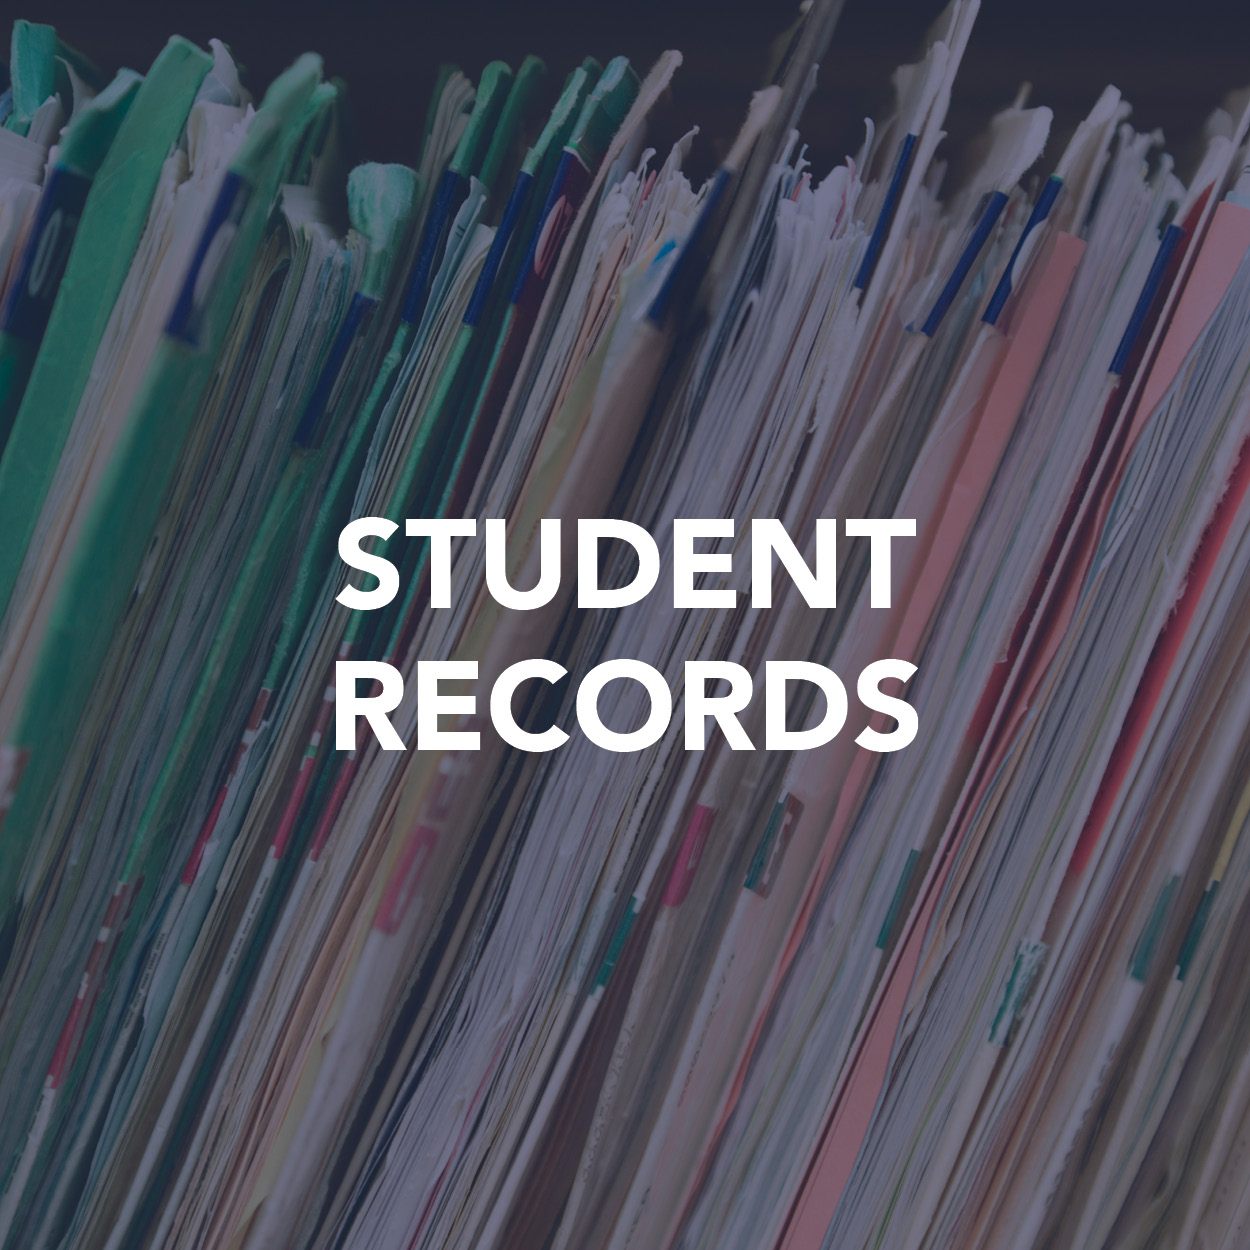 Student Records